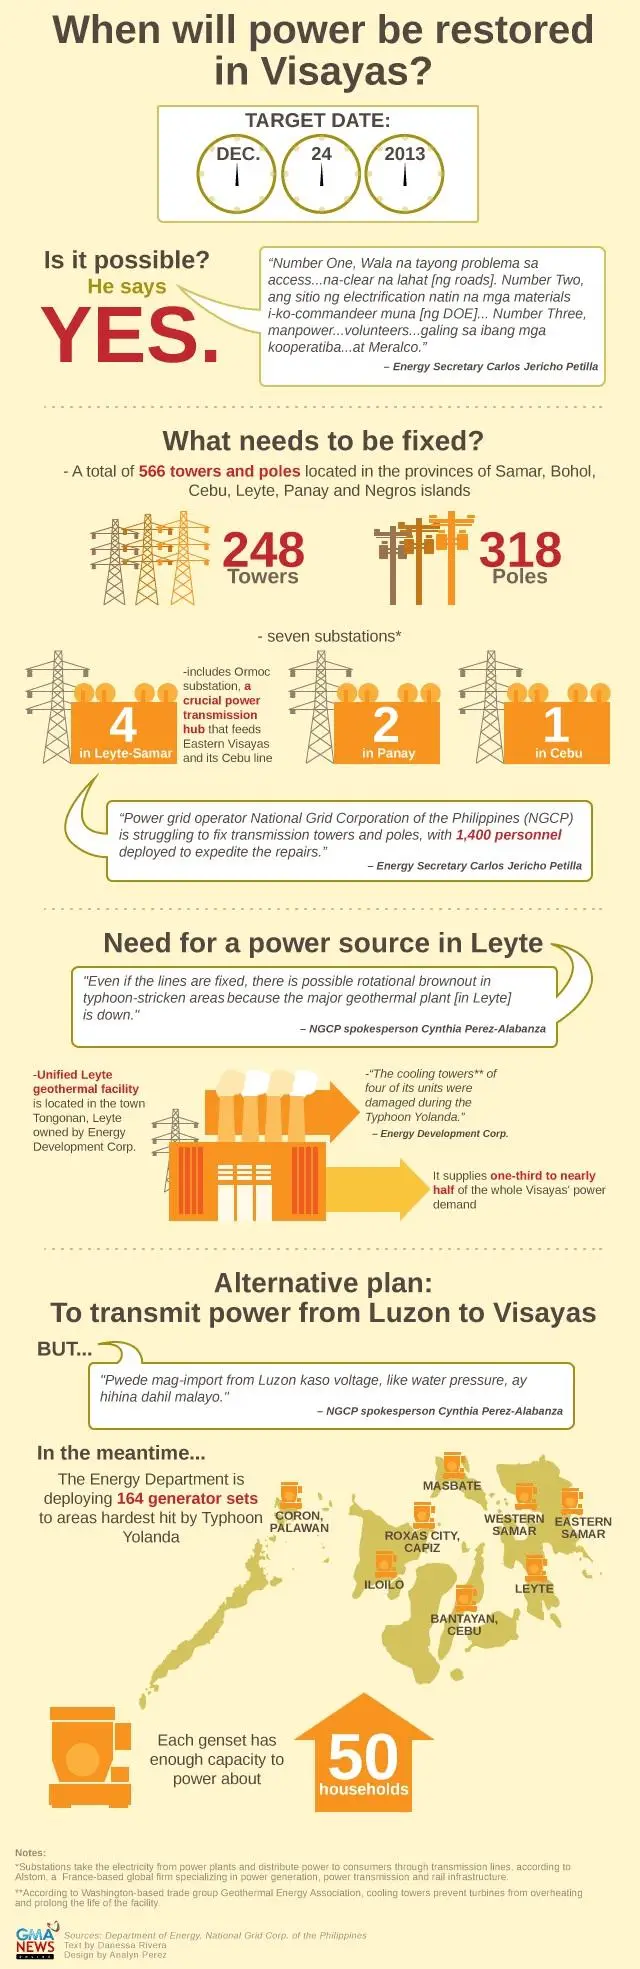 Visayas Power Generation Strategy
